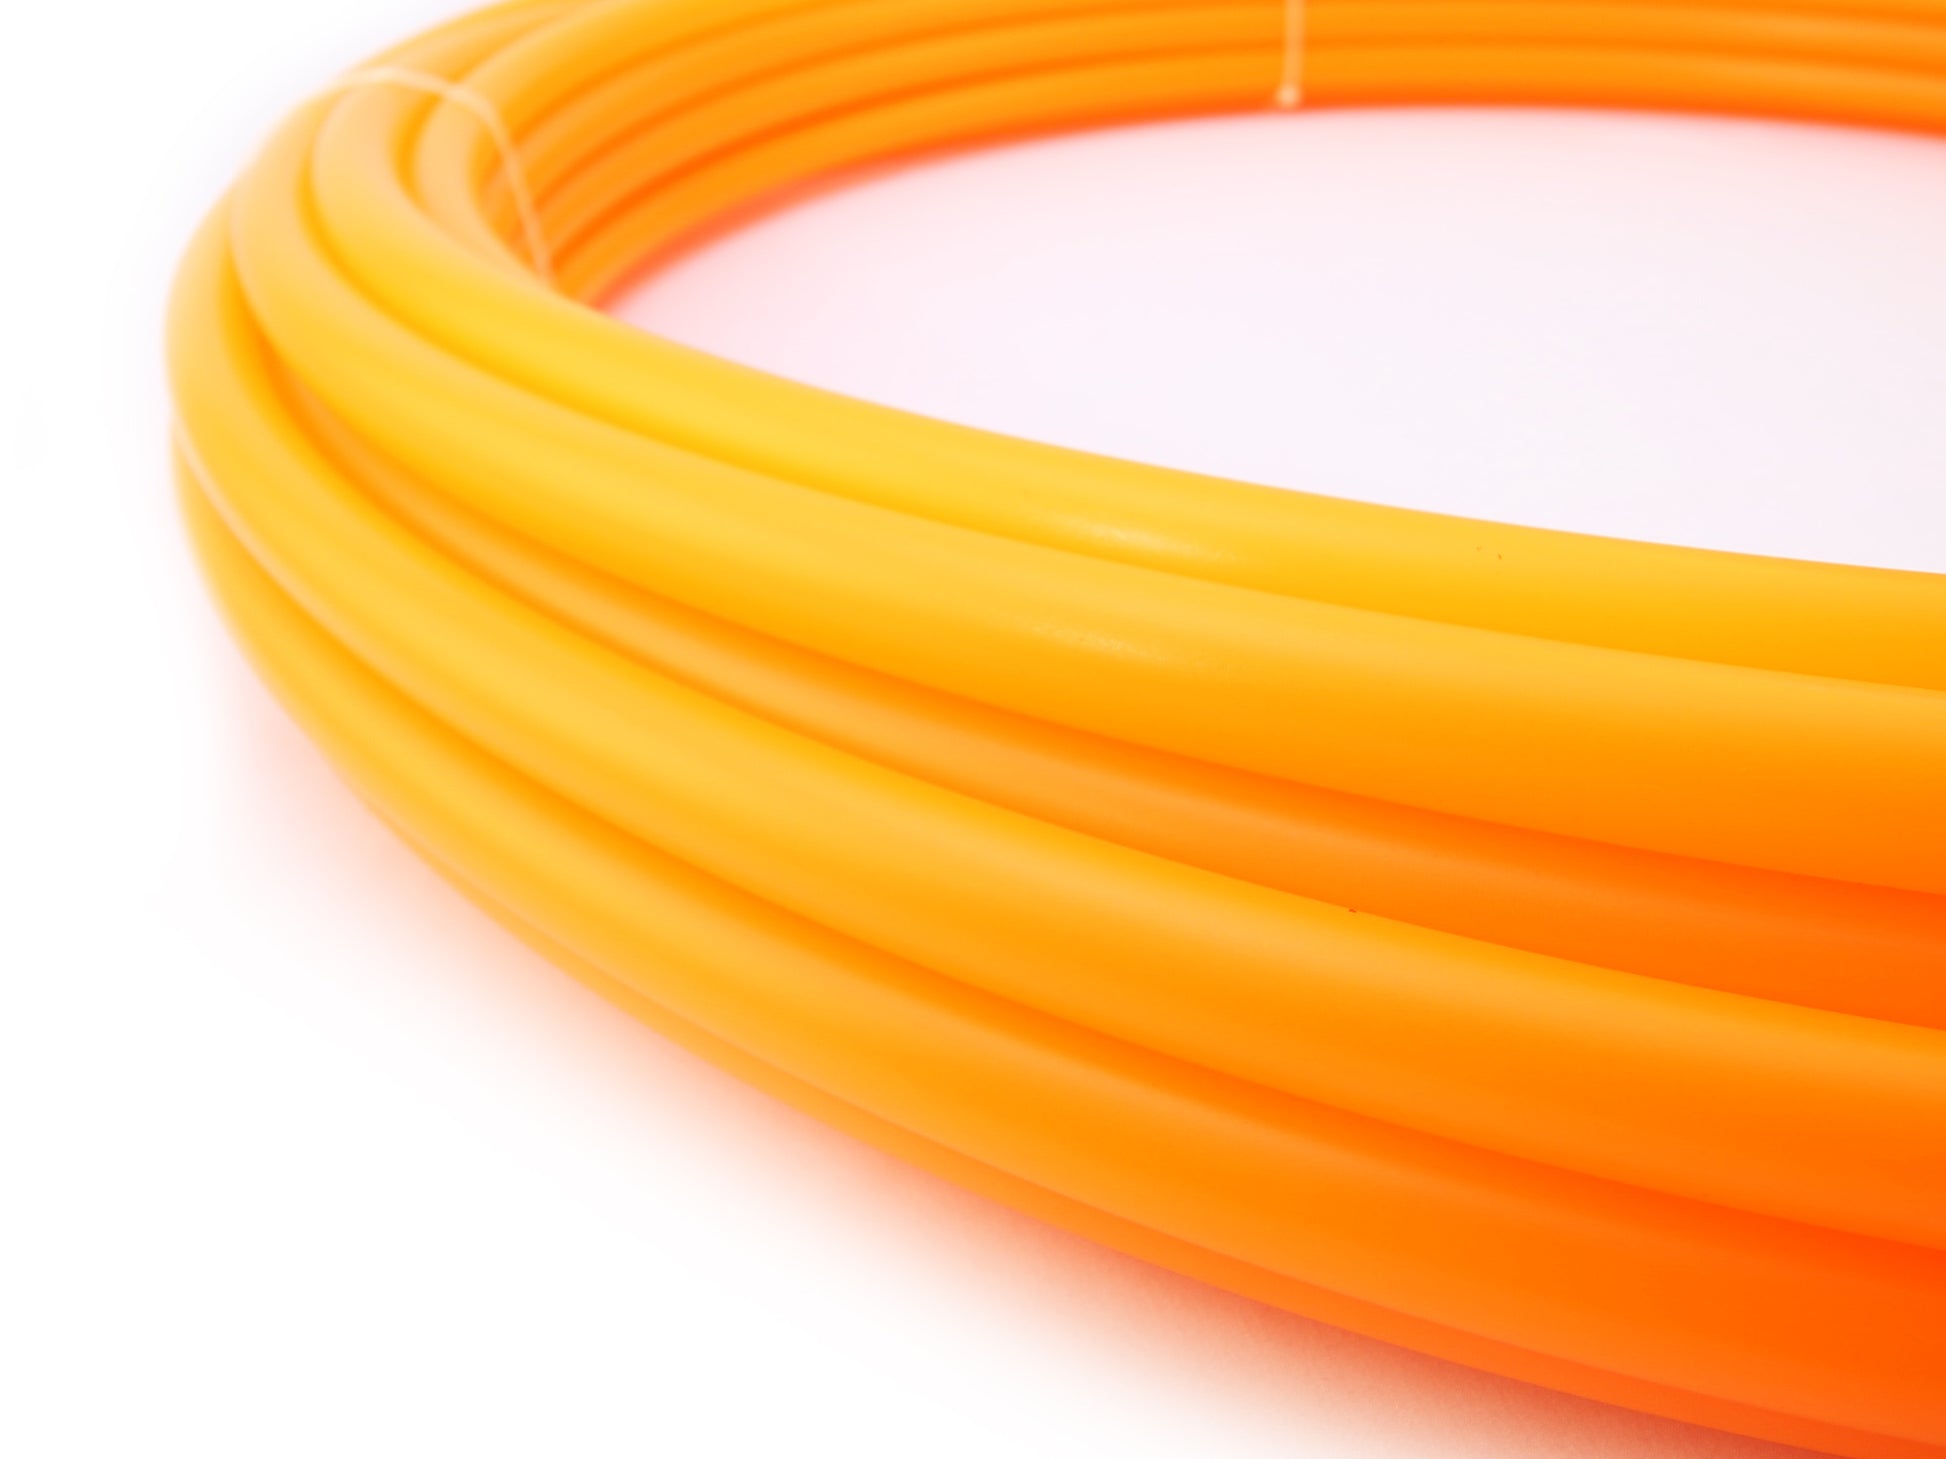 The Spinsterz - UV Orange Polypro Hula Hoop Tubing